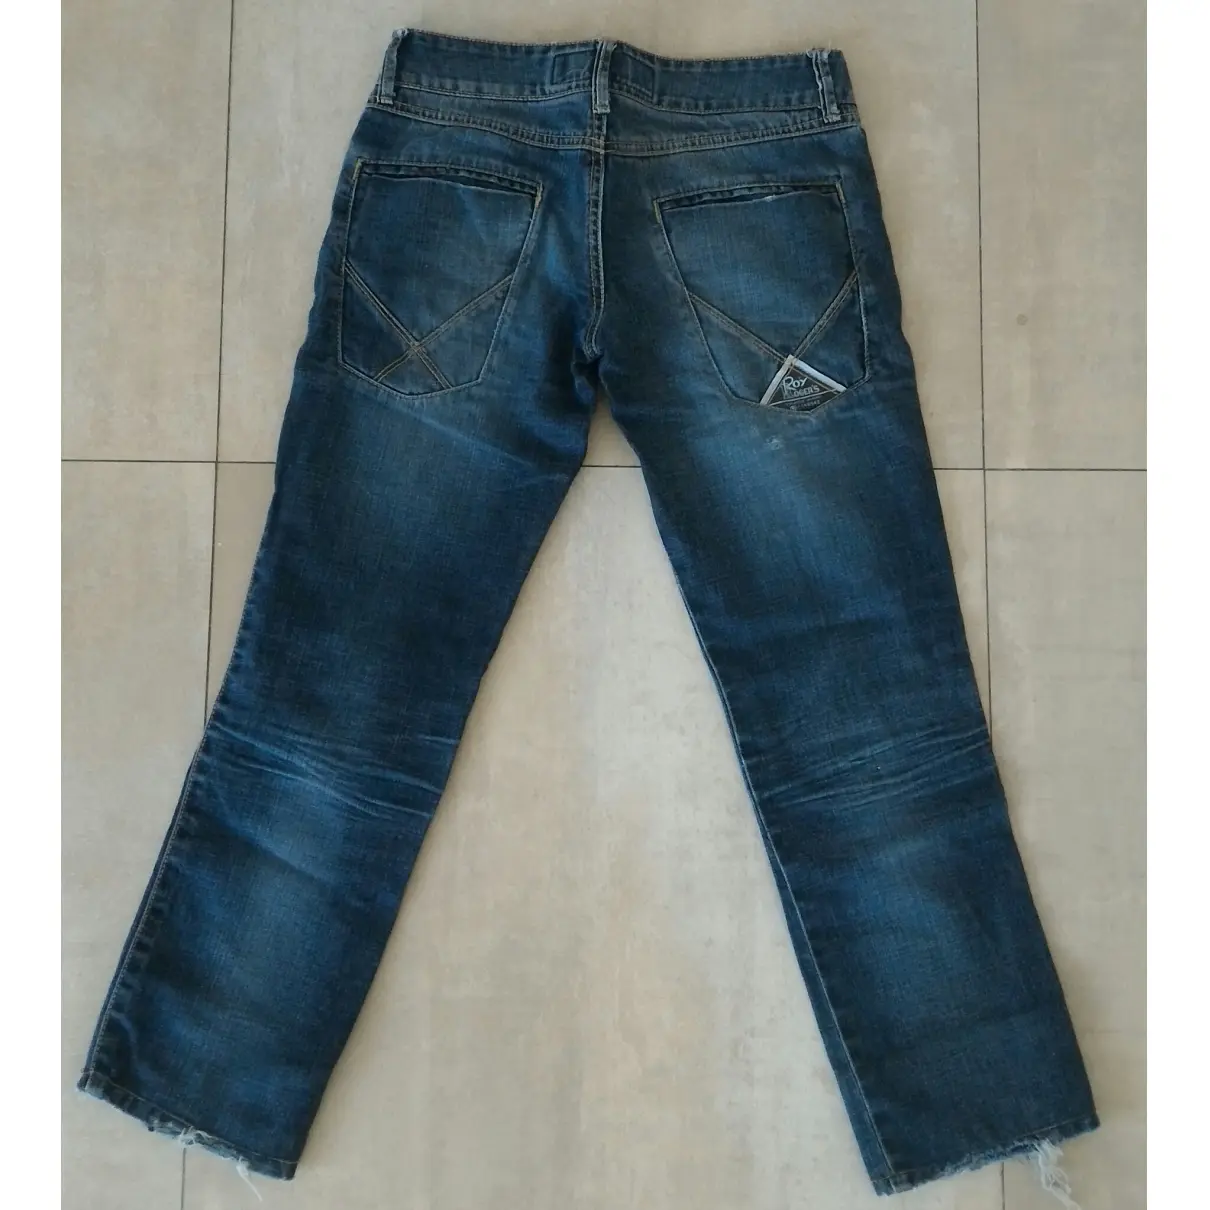 Roy Roger's Short jeans for sale